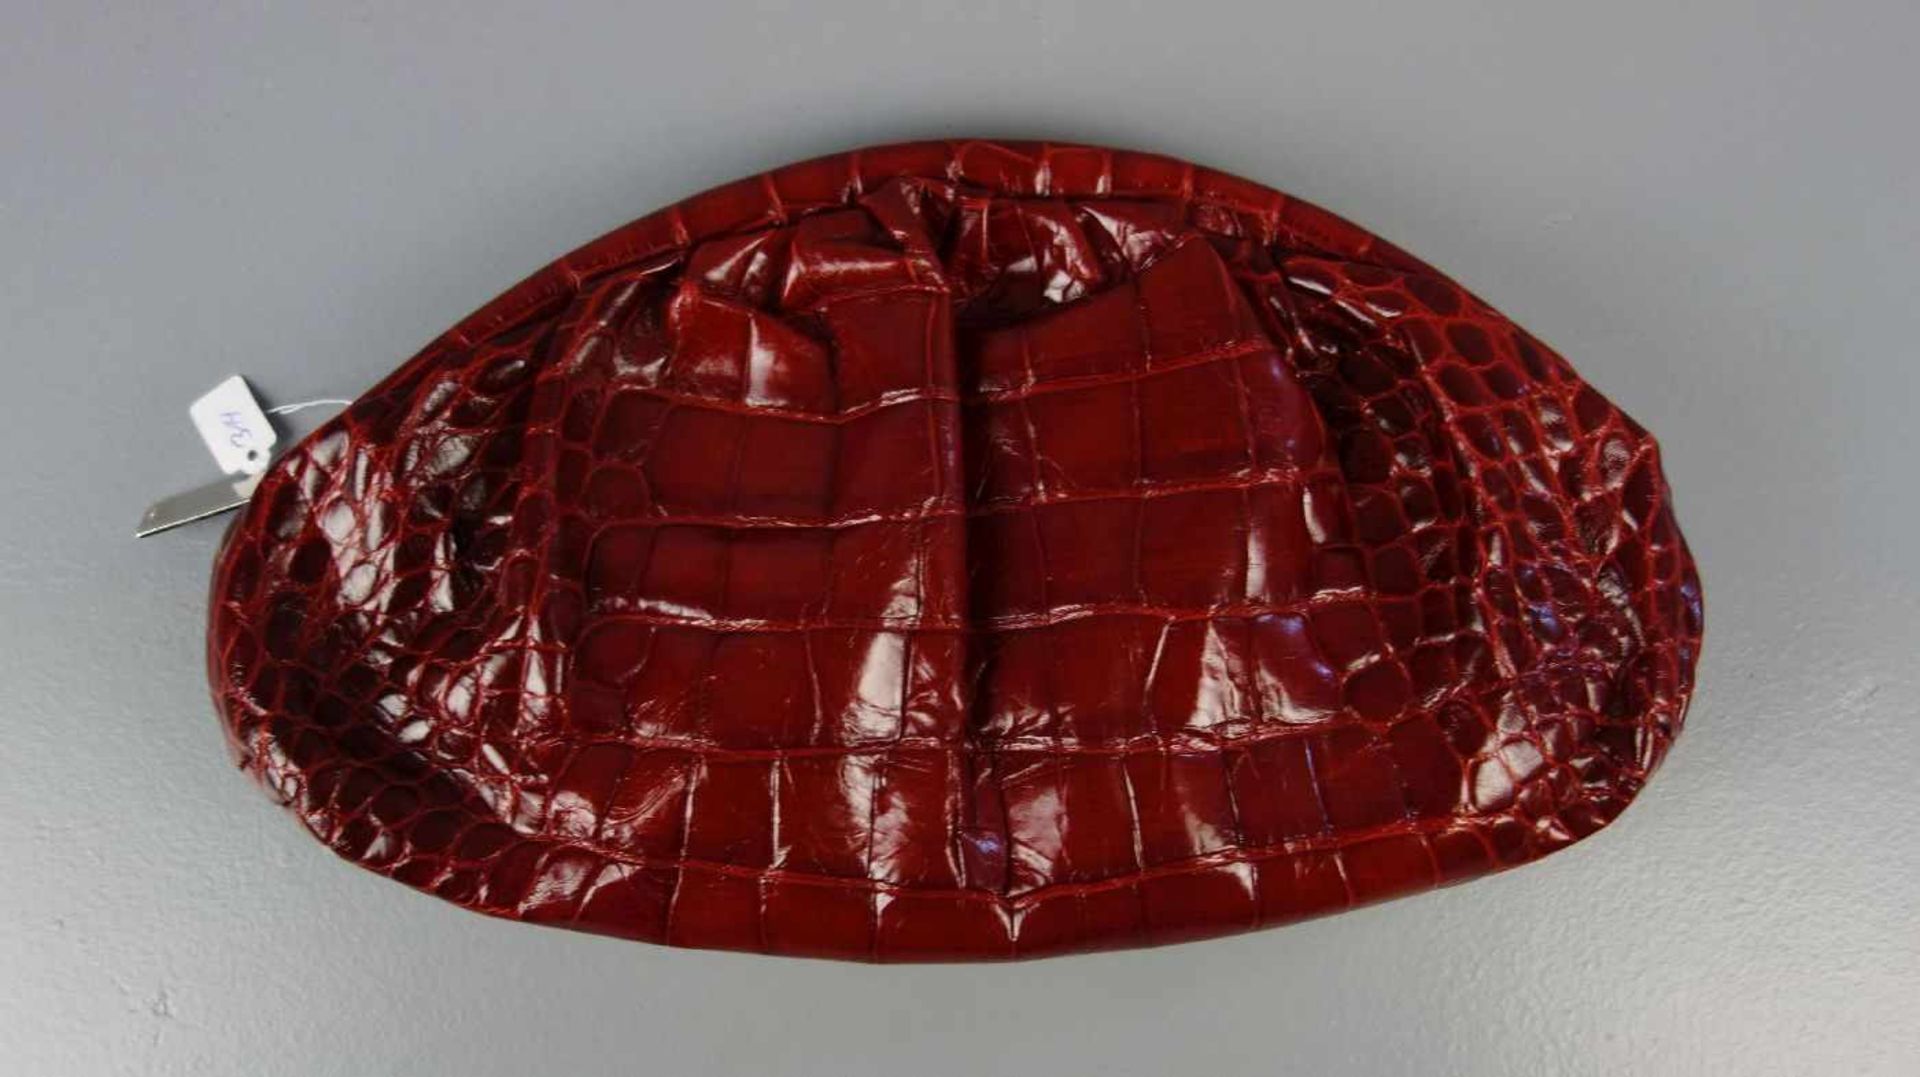 FURLA - CLUTCH / HANDTASCHE / handbag, Manufaktur Furla, Italien (seit 1927), rotes Rindsleder mit